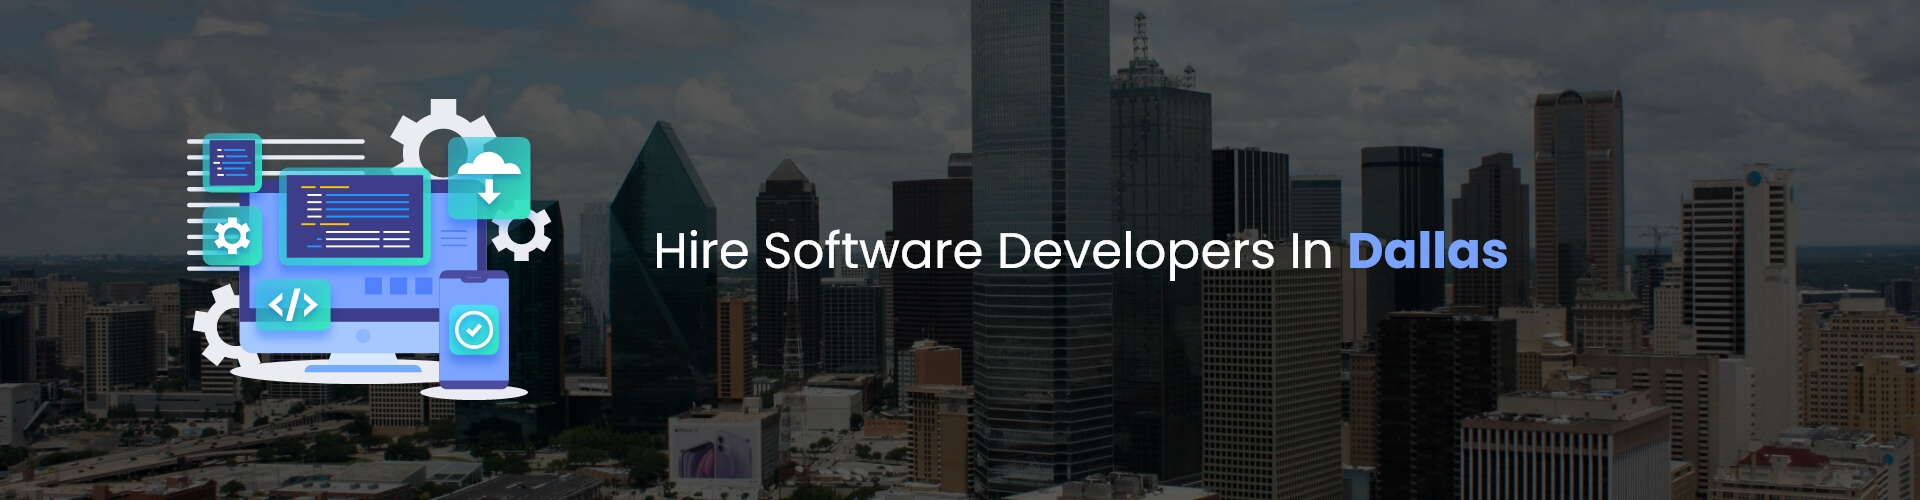 hire software developers in dallas